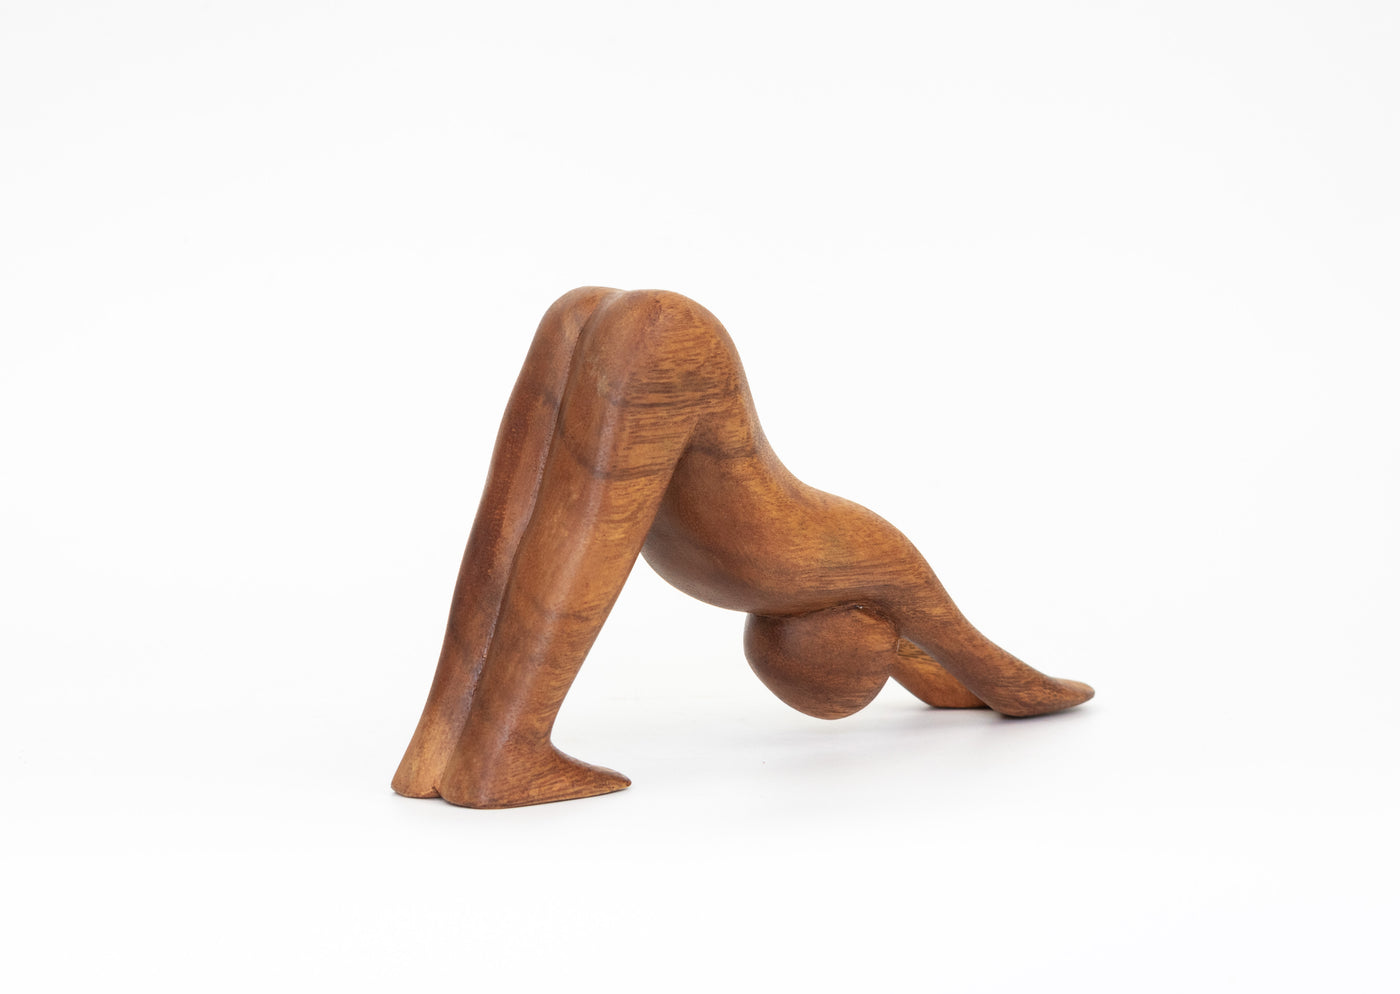 8" Wooden Handmade Mini Yoga Figurines, Yoga Pose Statue, Yoga Room Studio Decor, Mindful Home Decor Yogi Gift, Decorative Shelf Decor Objects - Downward Facing Dog